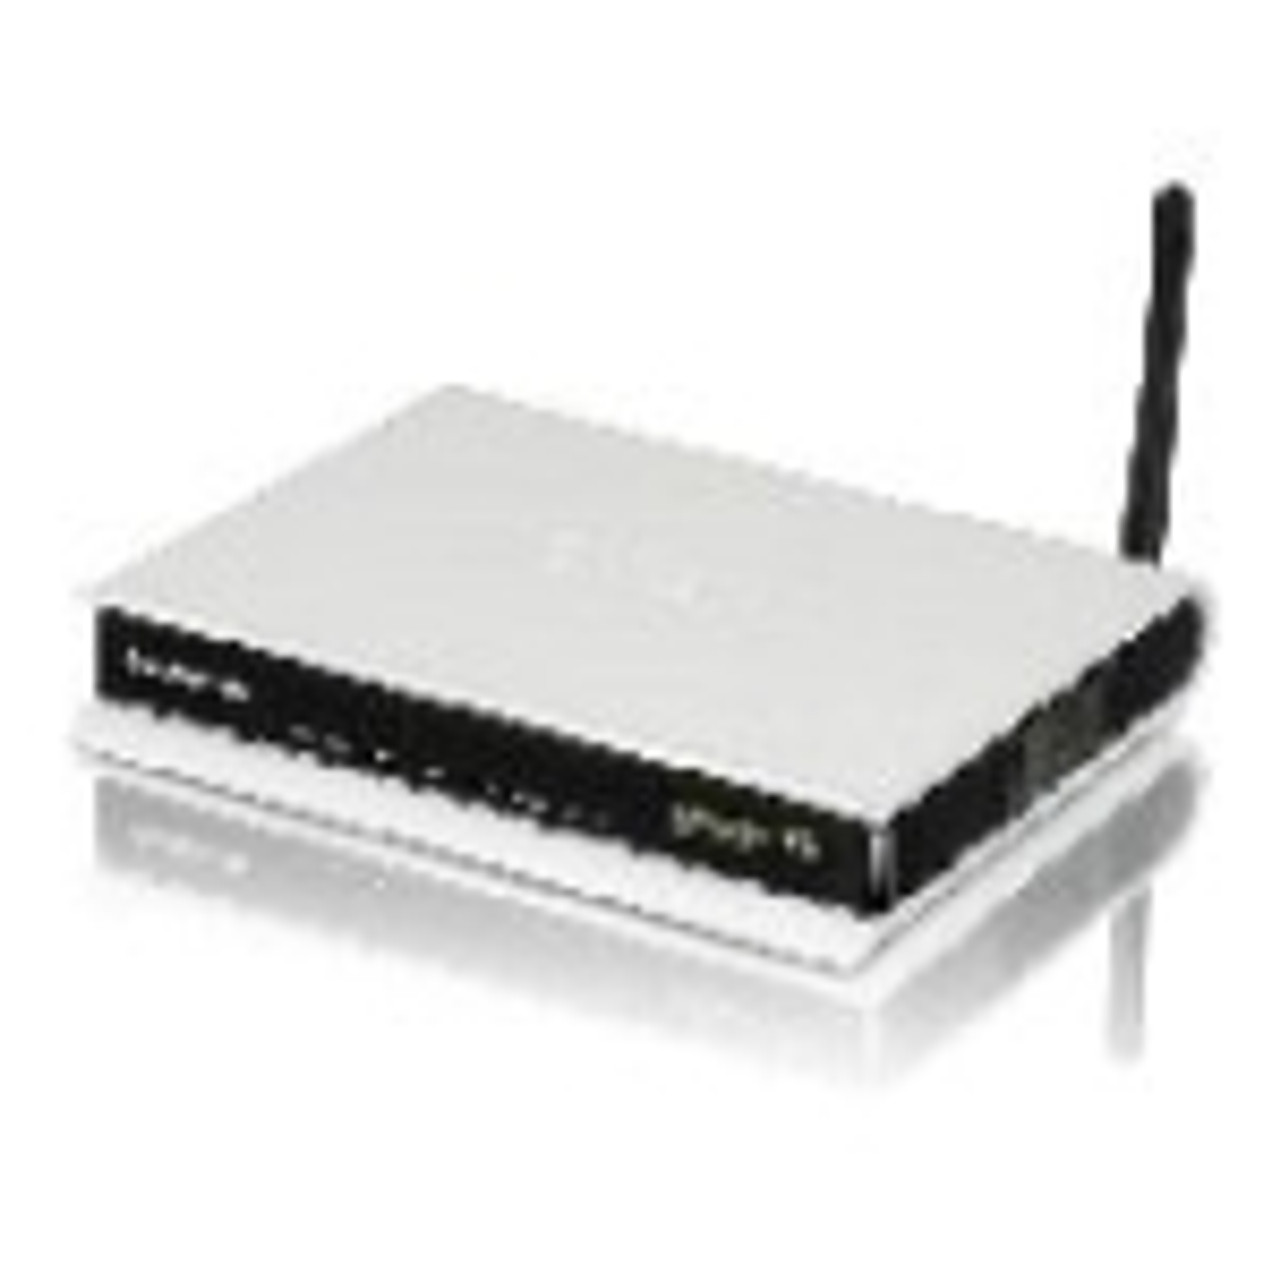 GWA504 IOGEAR Wireless-G Broadband Router 1 x WAN, 4 x LAN (Refurbished)